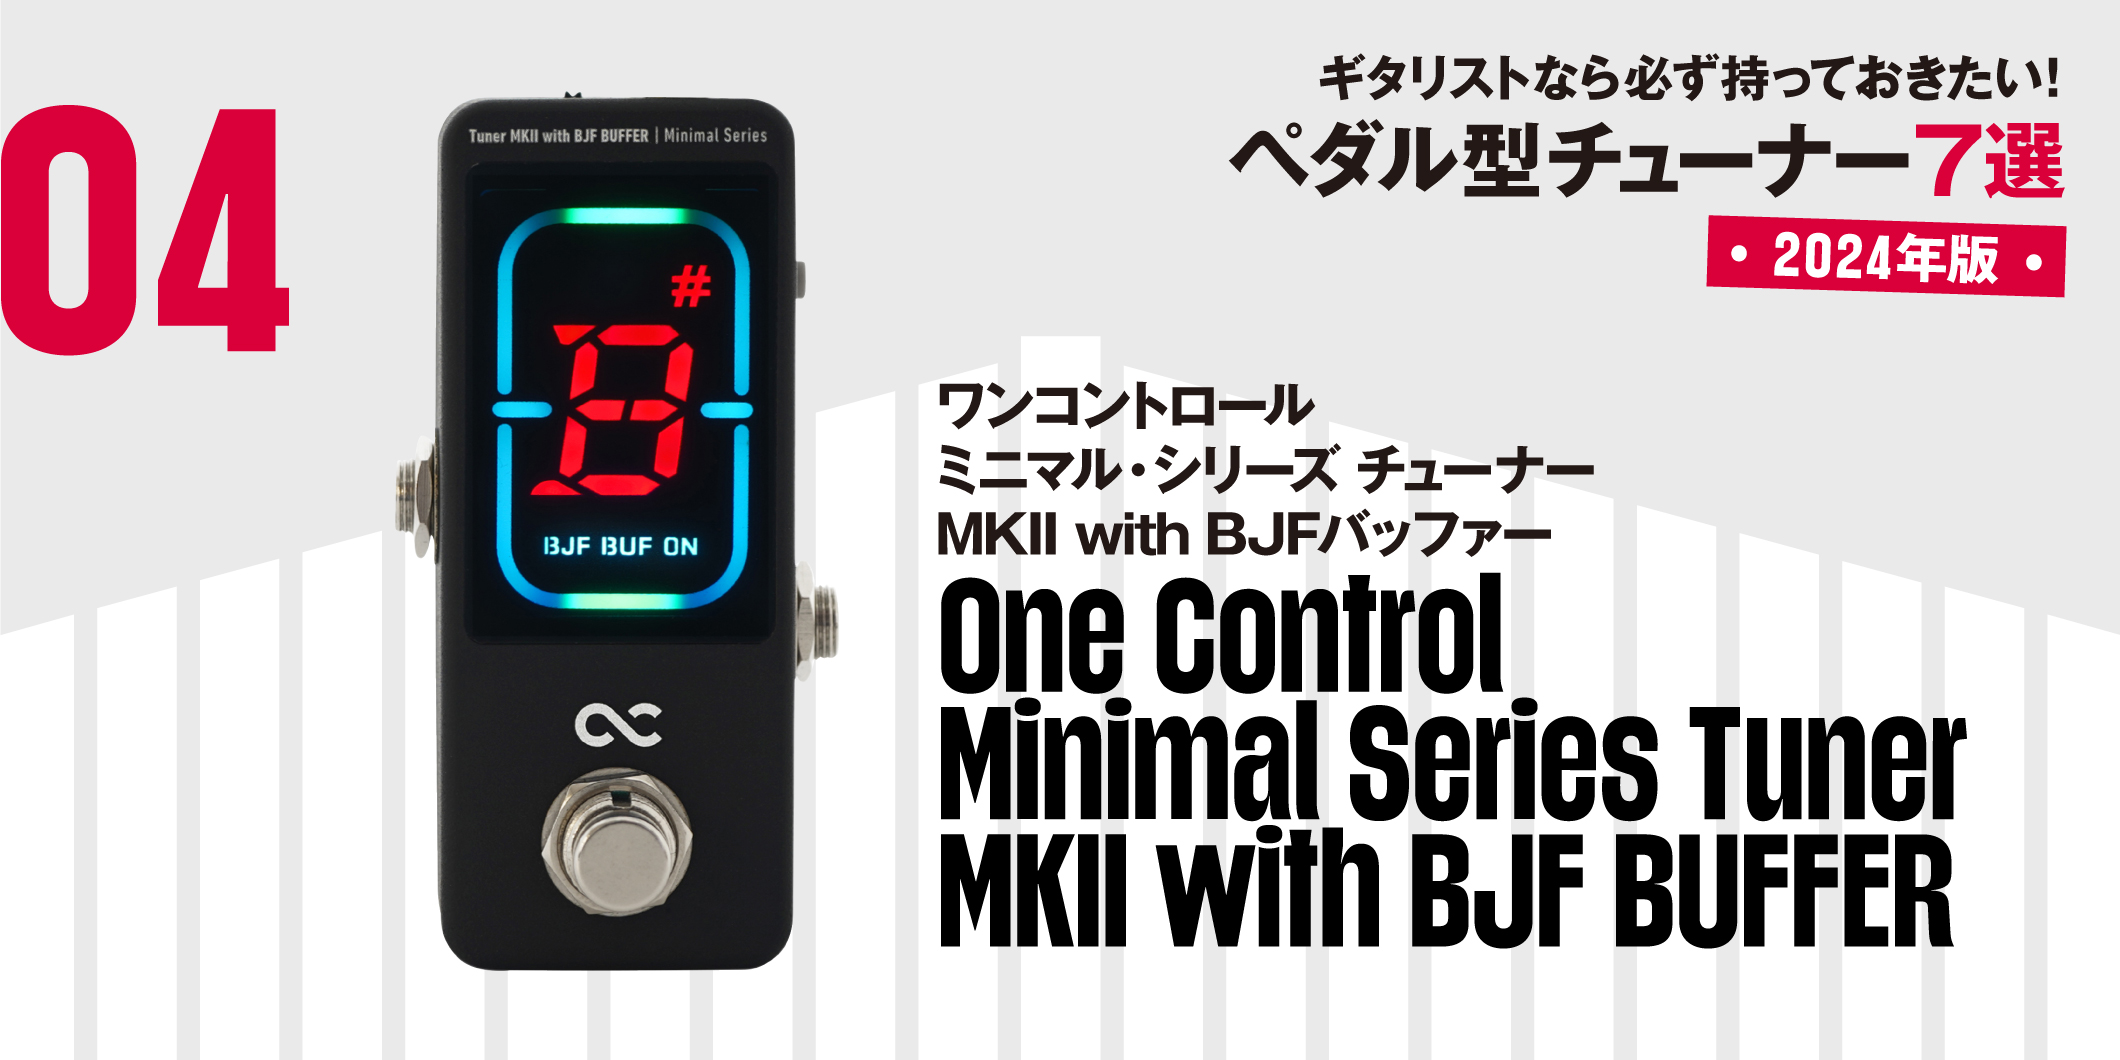 One Control／Minimal Series Tuner MKII with BJF BUFFER〜ギタリスト 